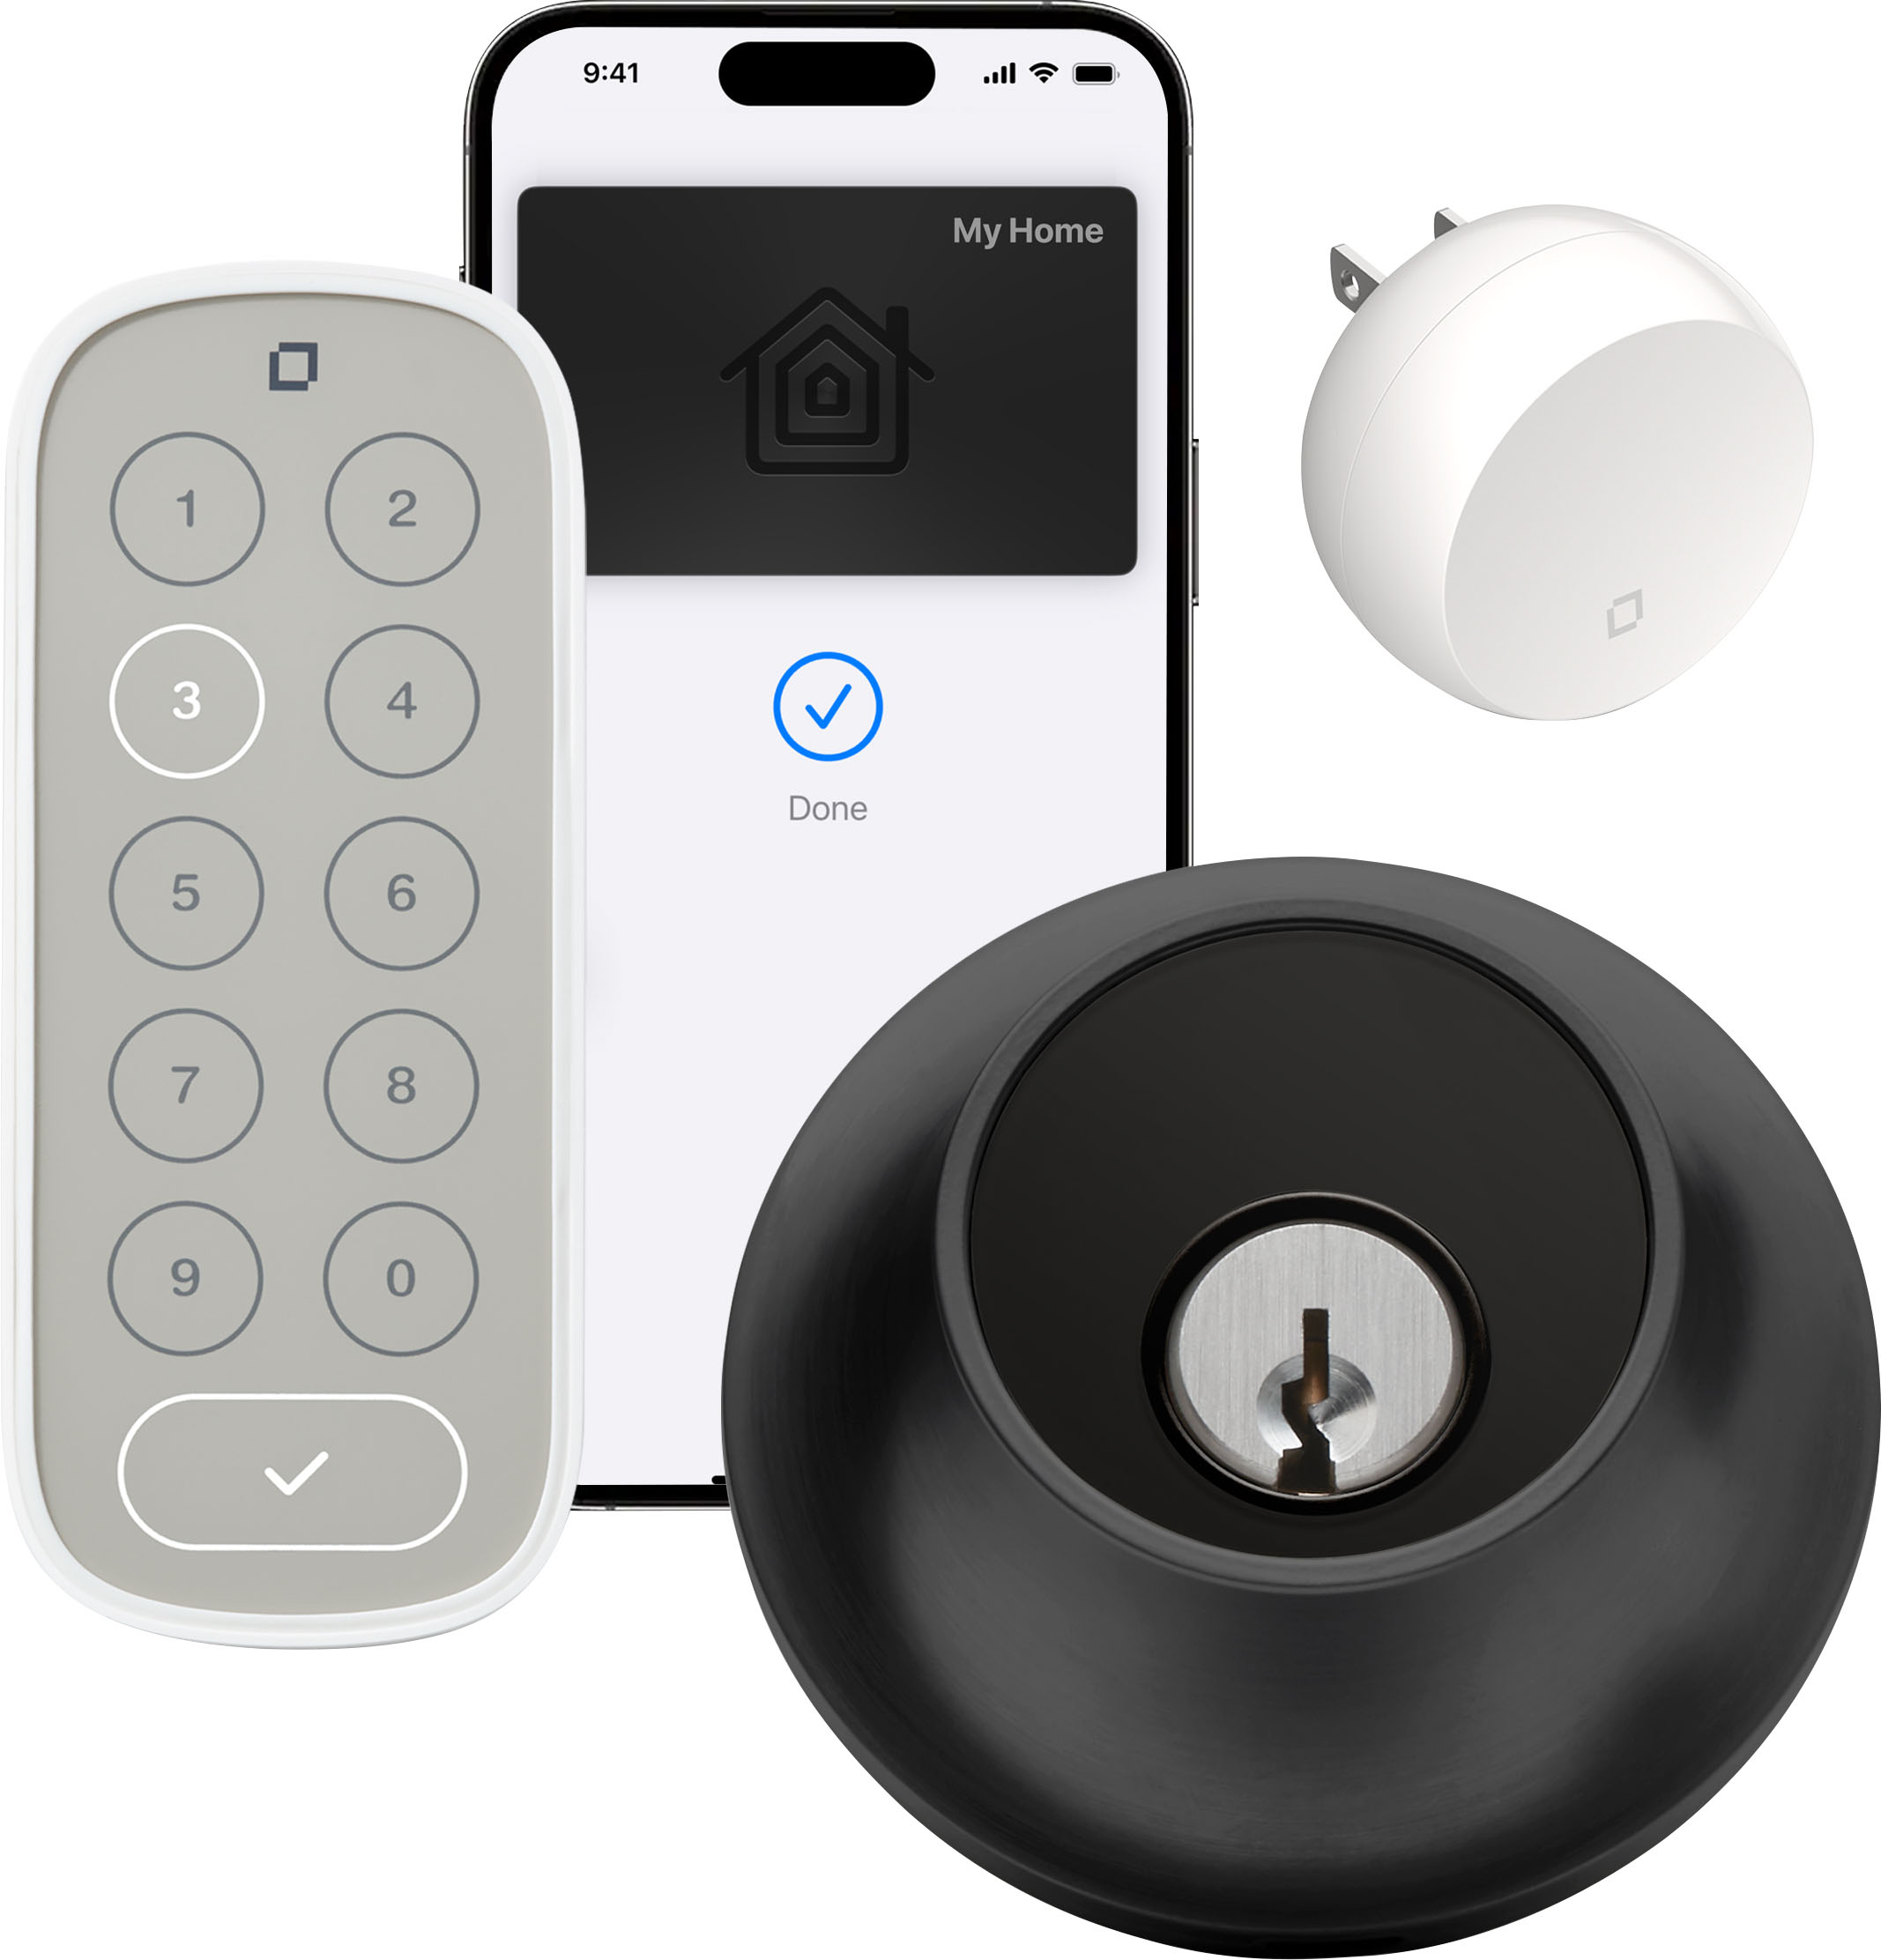 Google Nest x Yale Lock Satin Nickel Wi-fi Compatibility Bluetooth